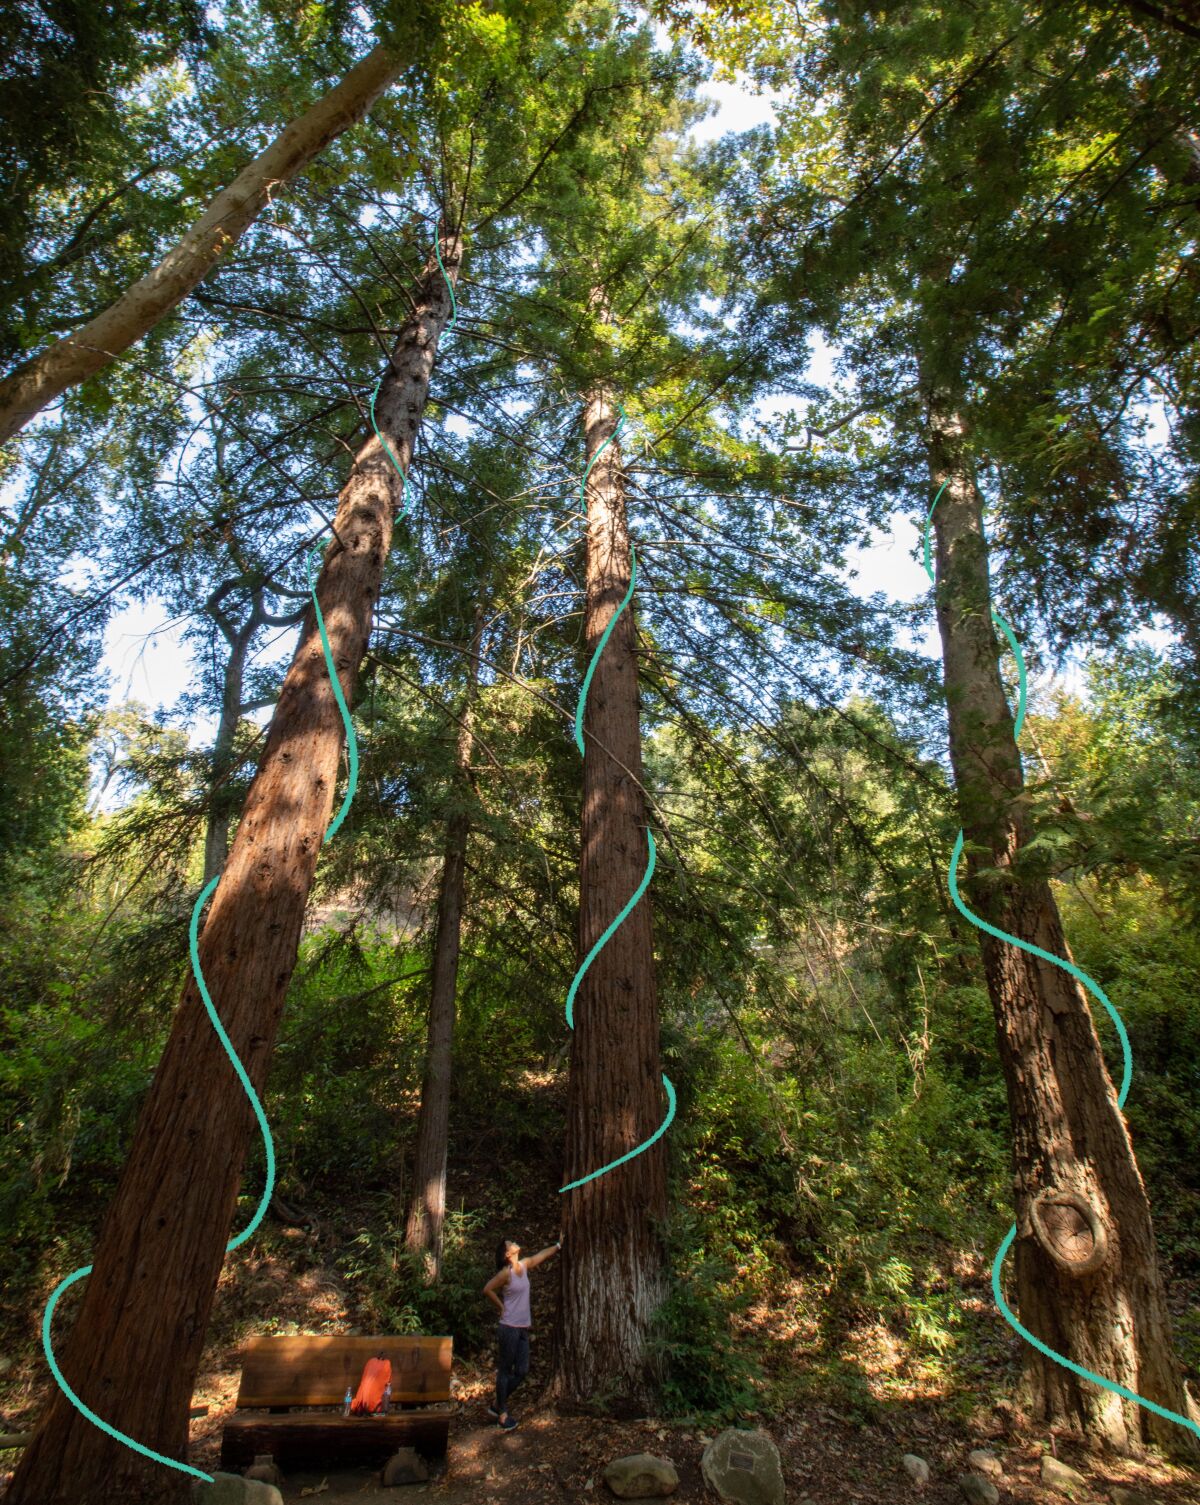 The  redwoods at the Santa Barbara Botanical Garden